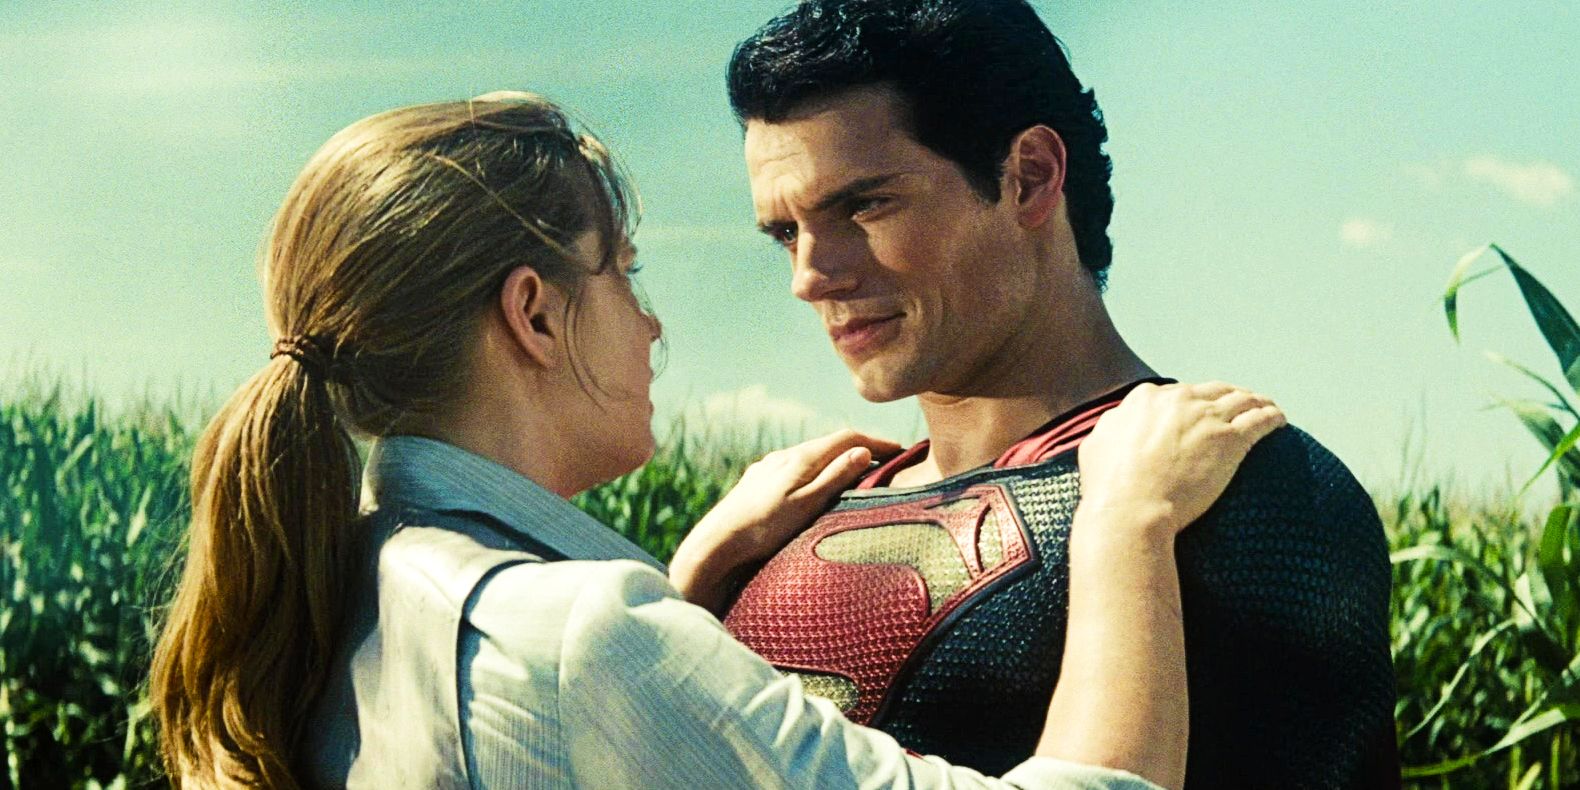 Reply to @isaiah_j24 Best Superman theme #manofsteel #superman #henryc